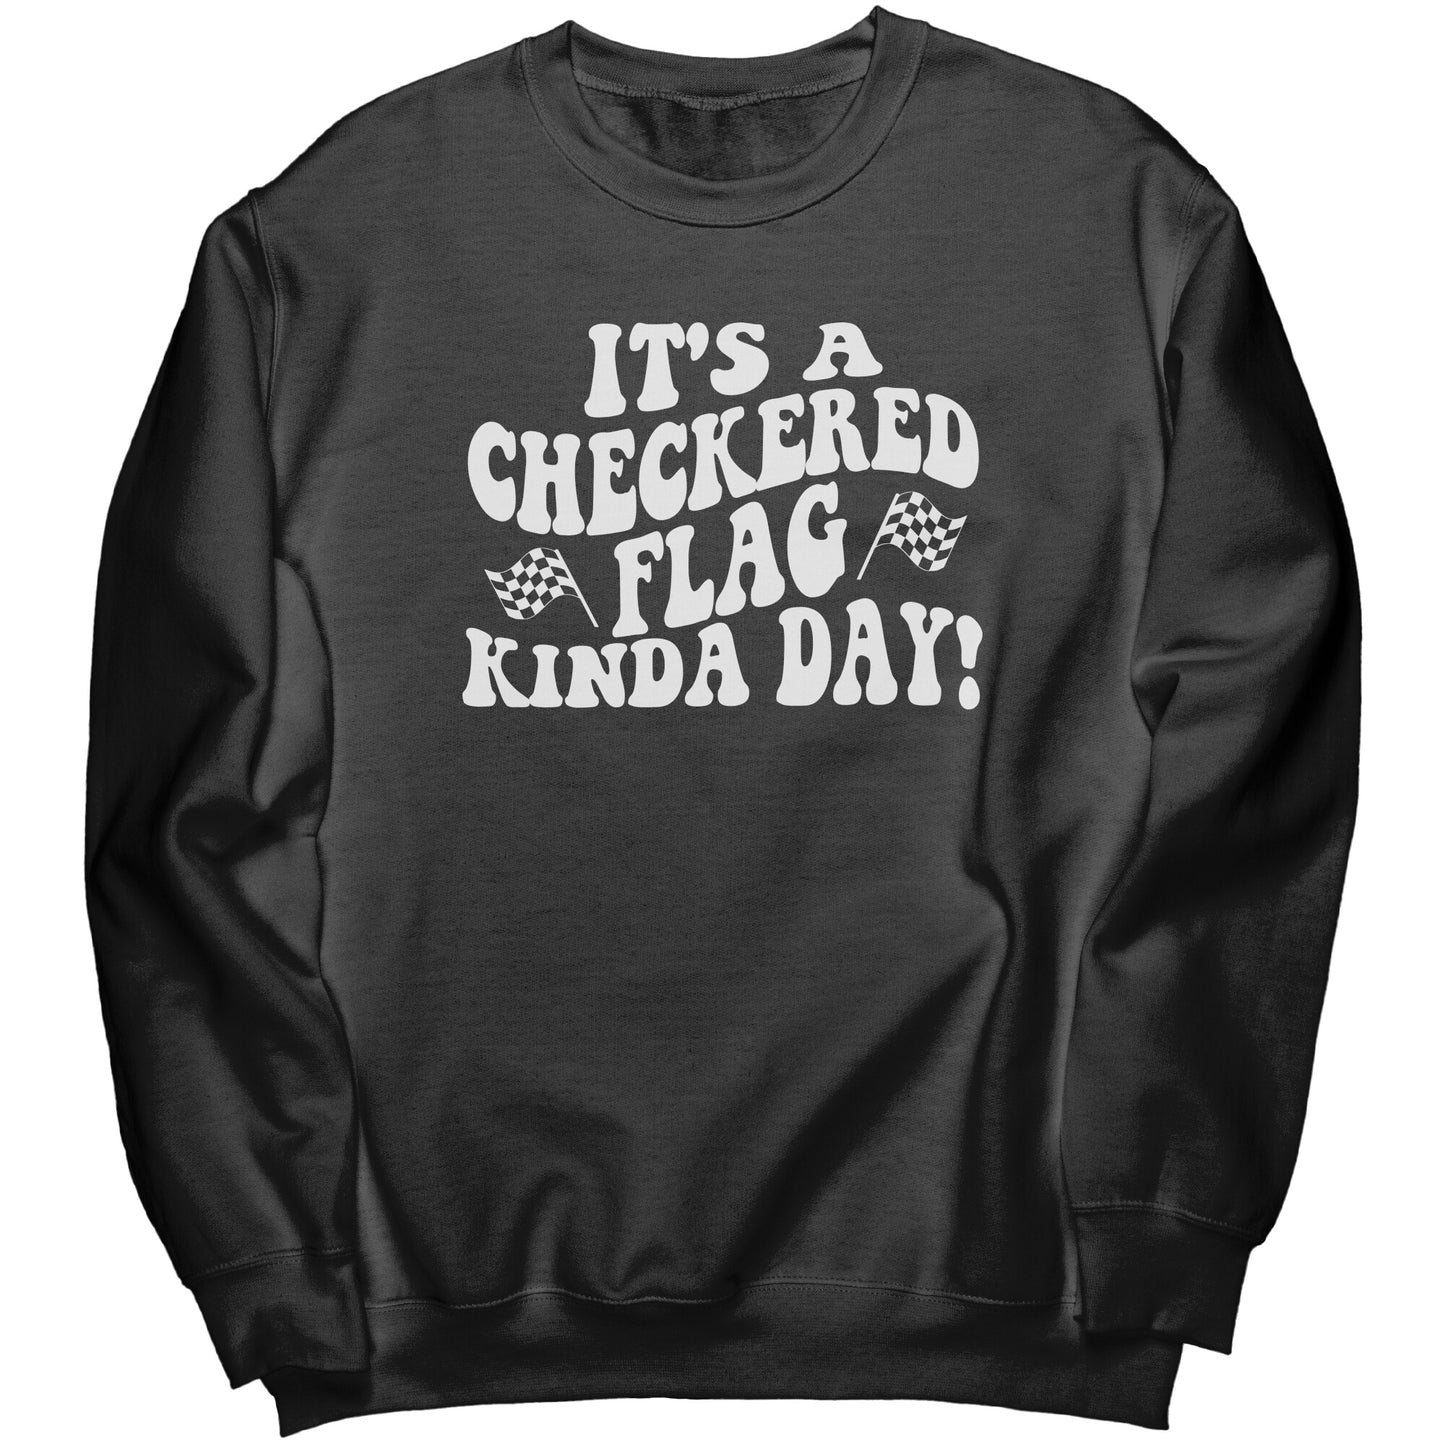 It's A Checkered Flag Kind Of Day Crewneck Sweatshirt